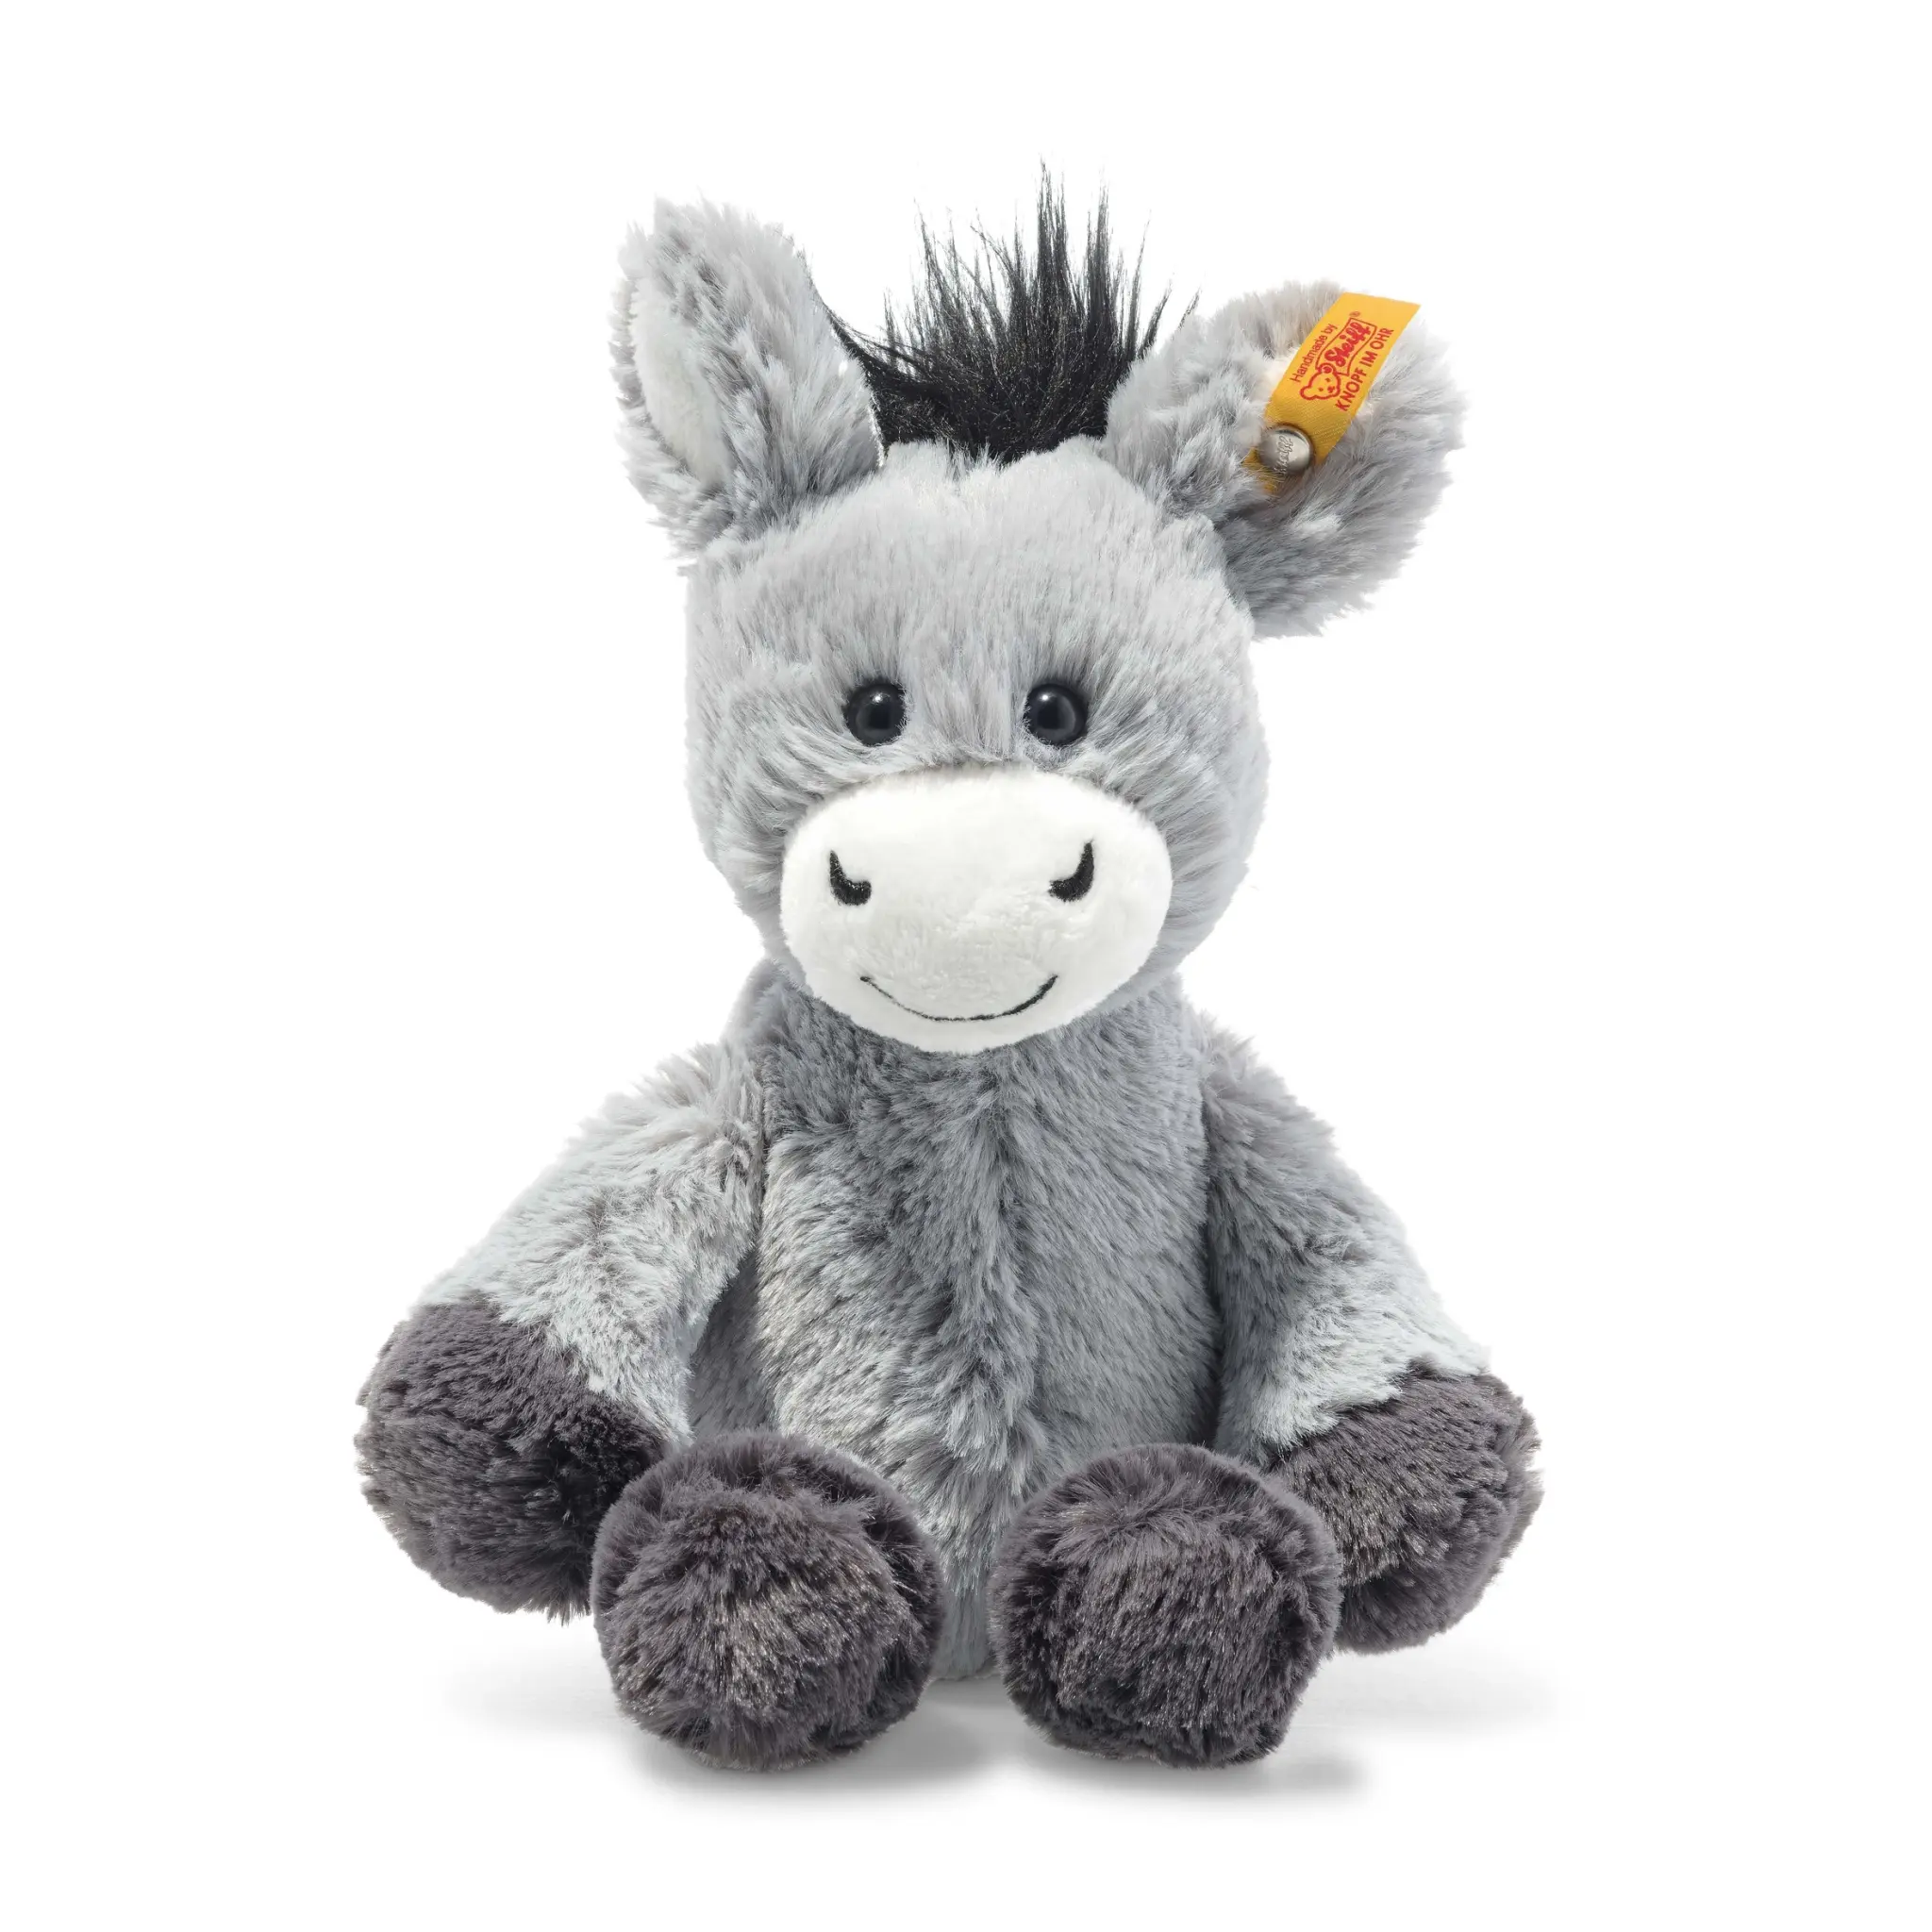 Steiff Dinkie Donkey Plush Stuffed Toy